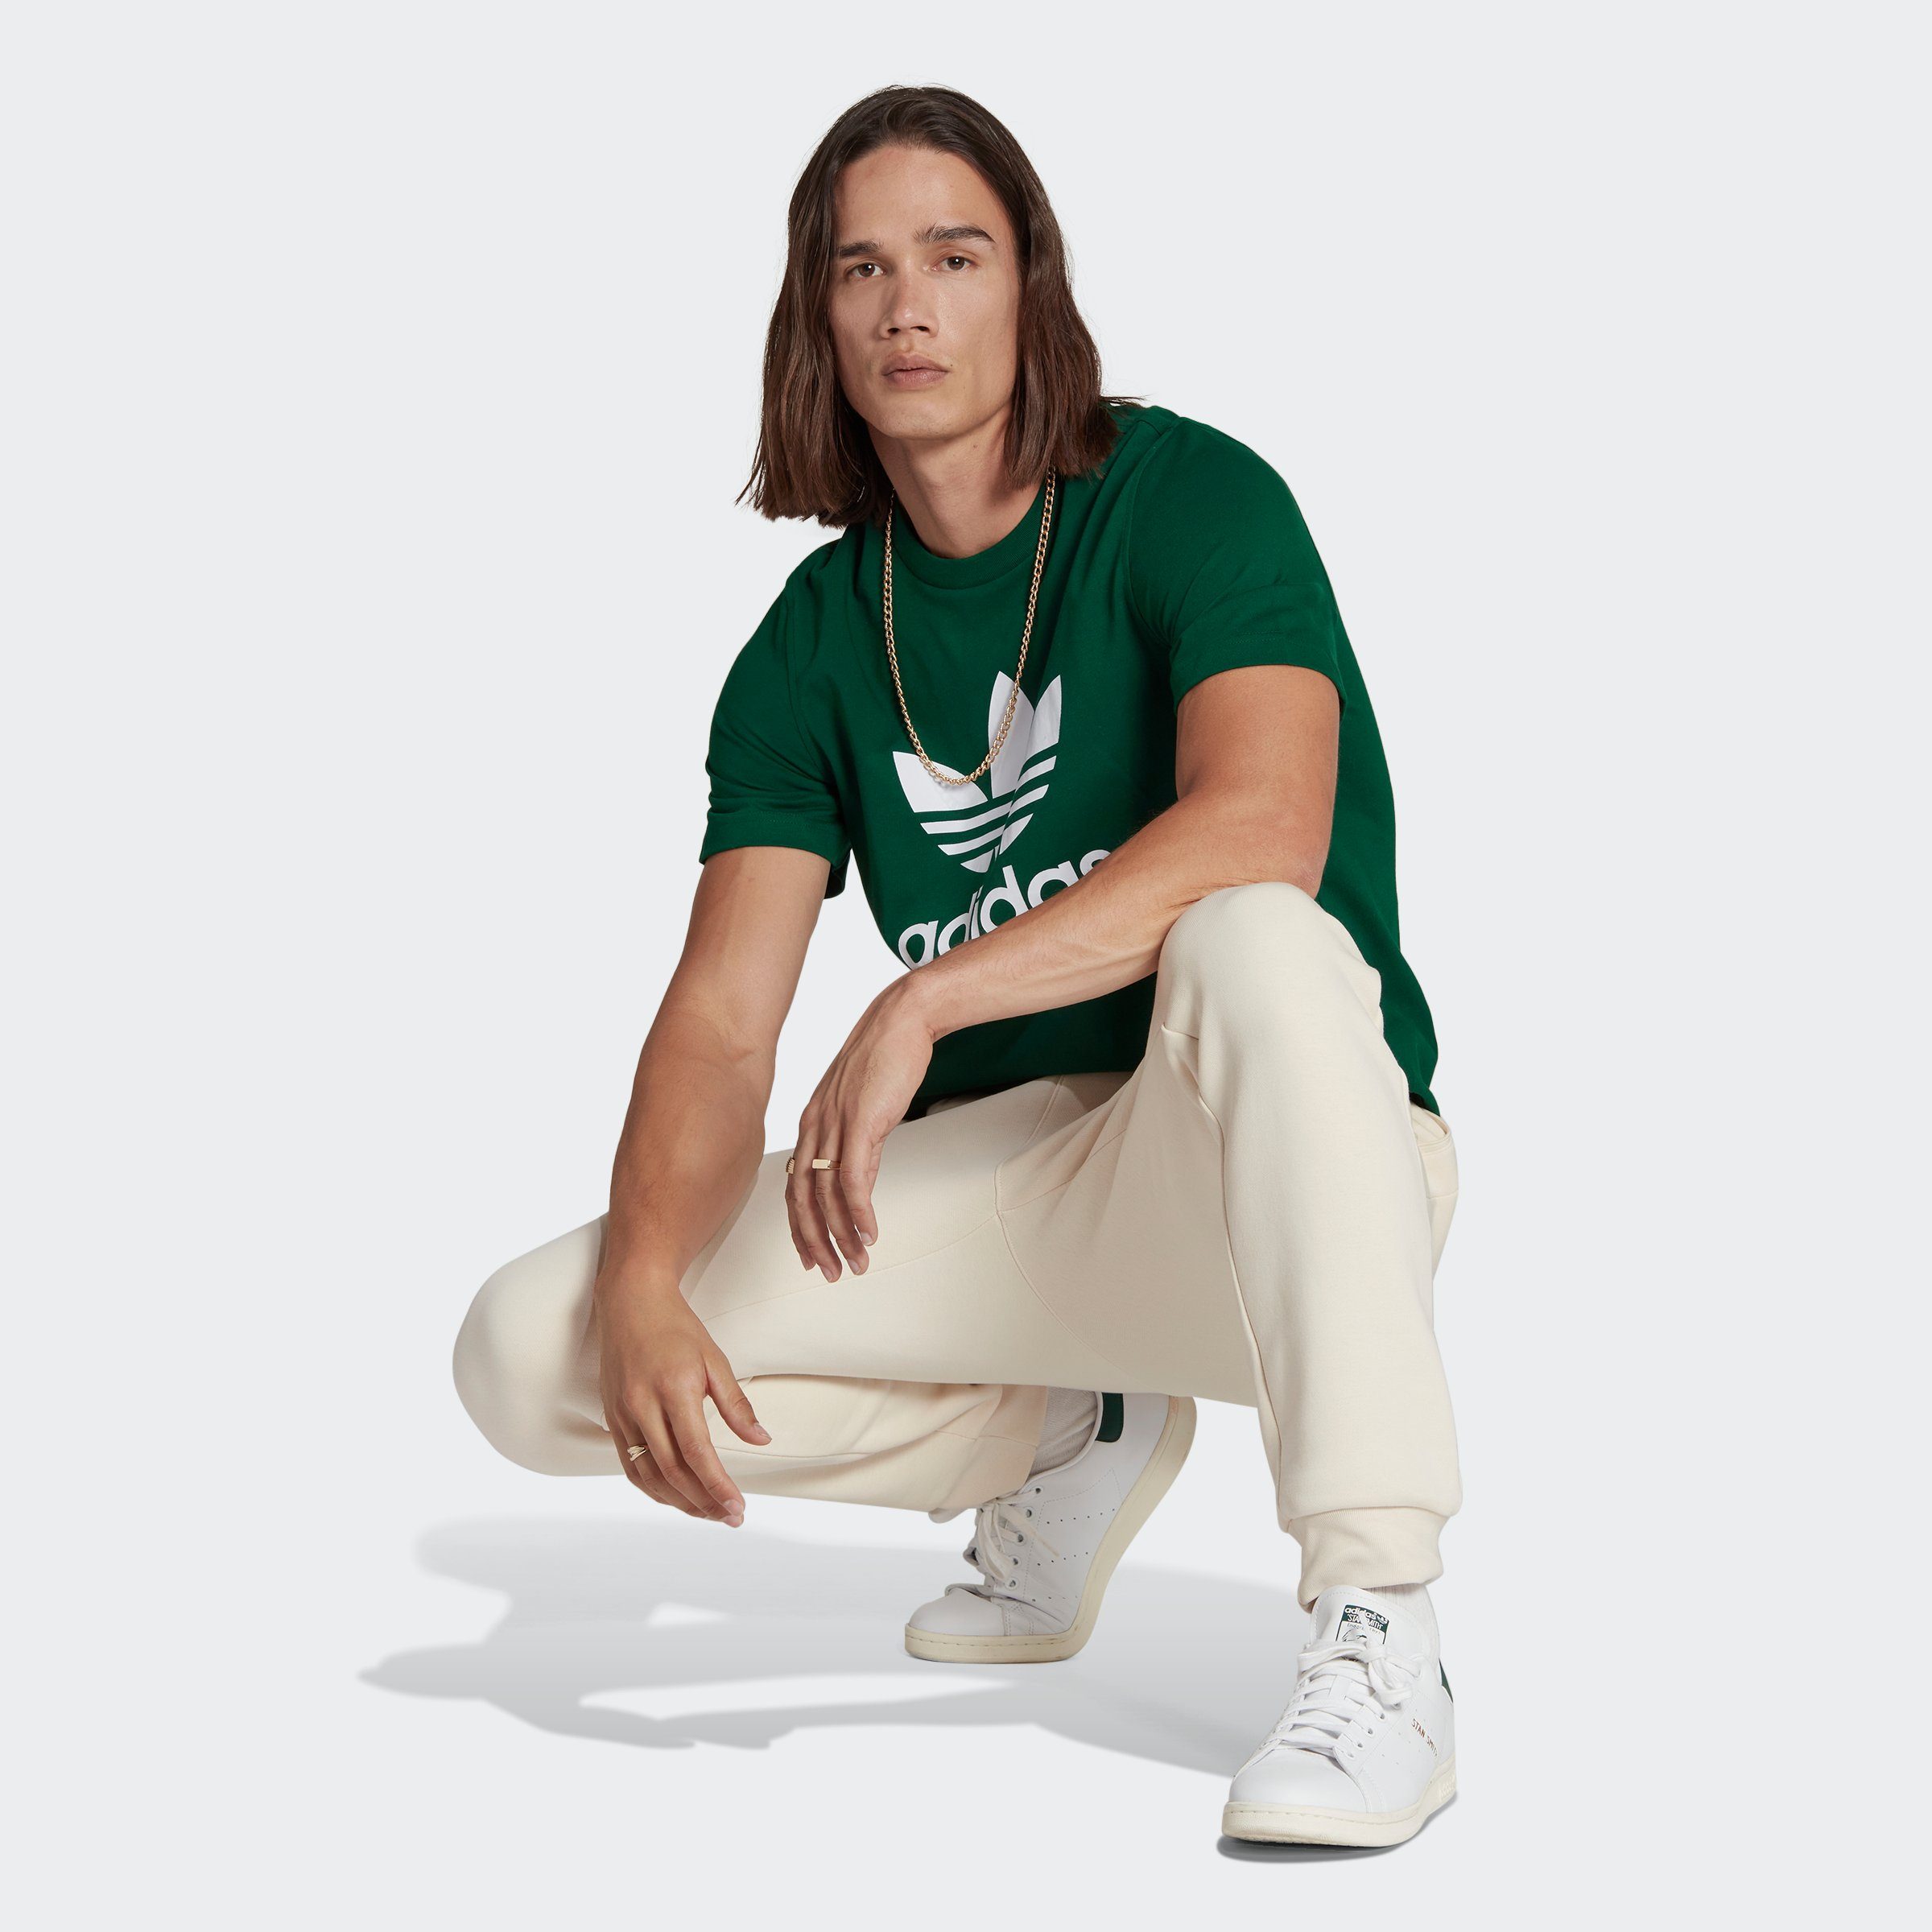 adidas Originals T-Shirt Green CLASSICS ADICOLOR Dark TREFOIL